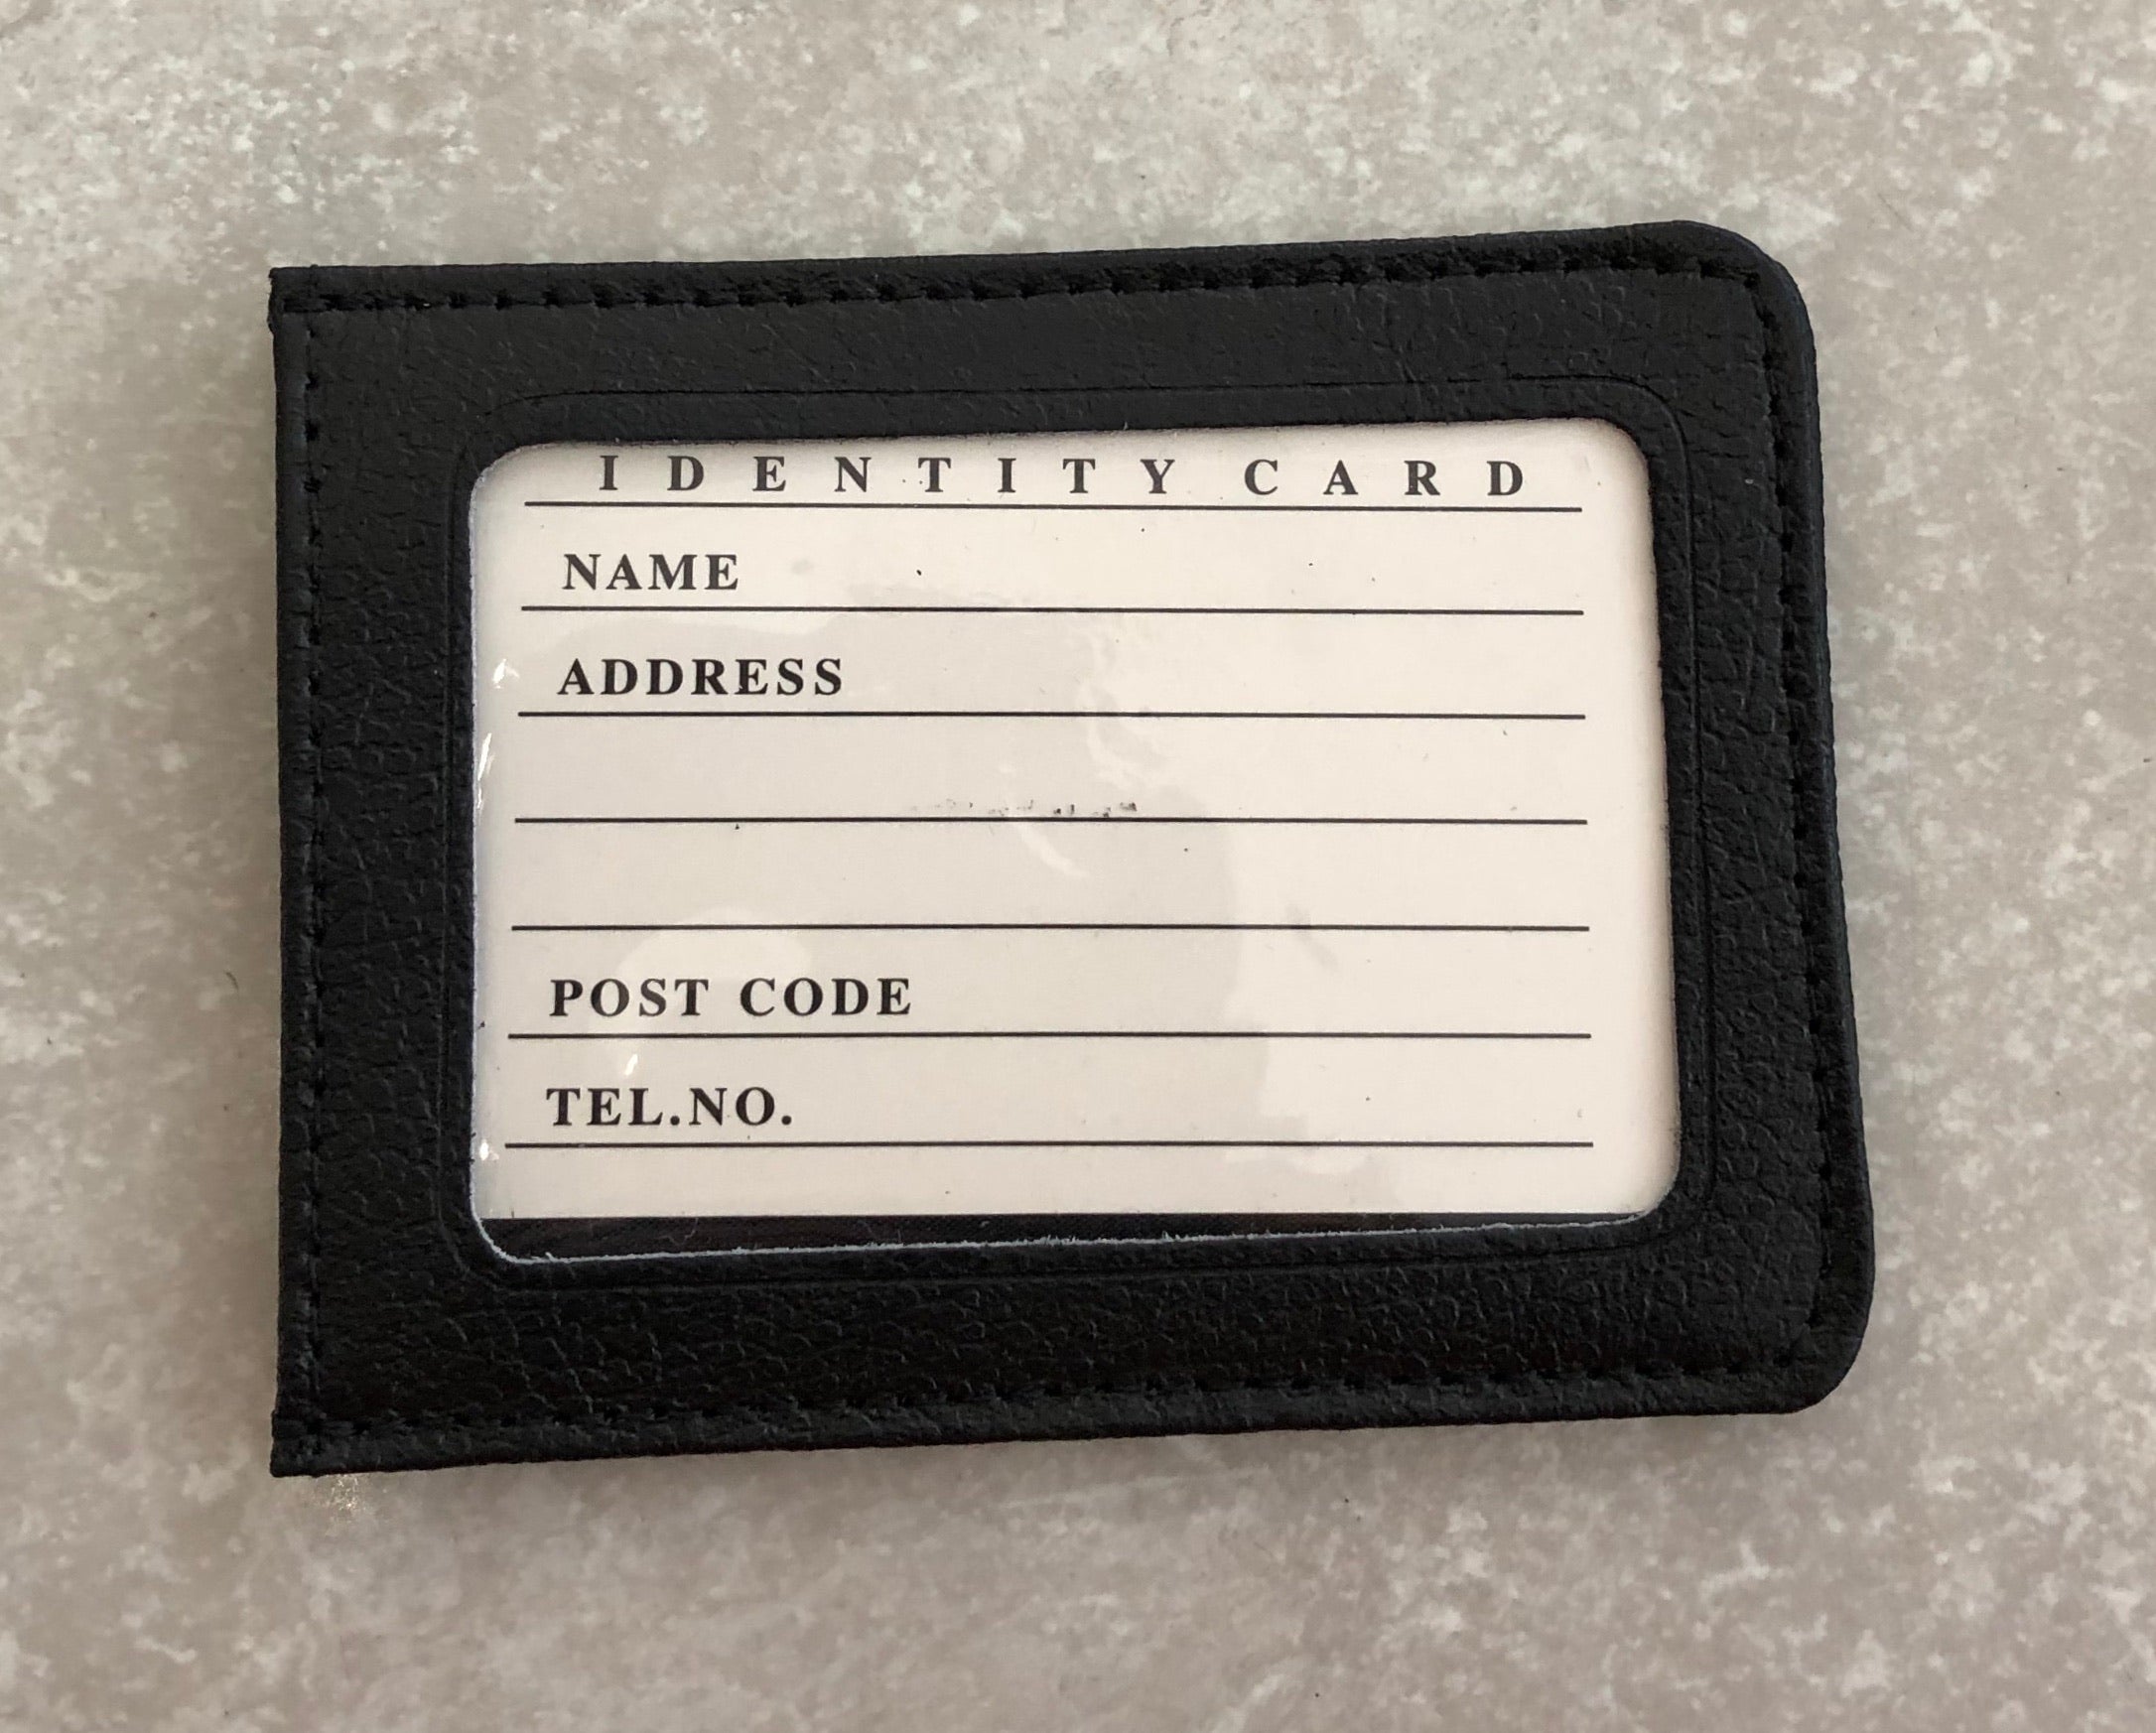 Leather single side Travel Card Holder